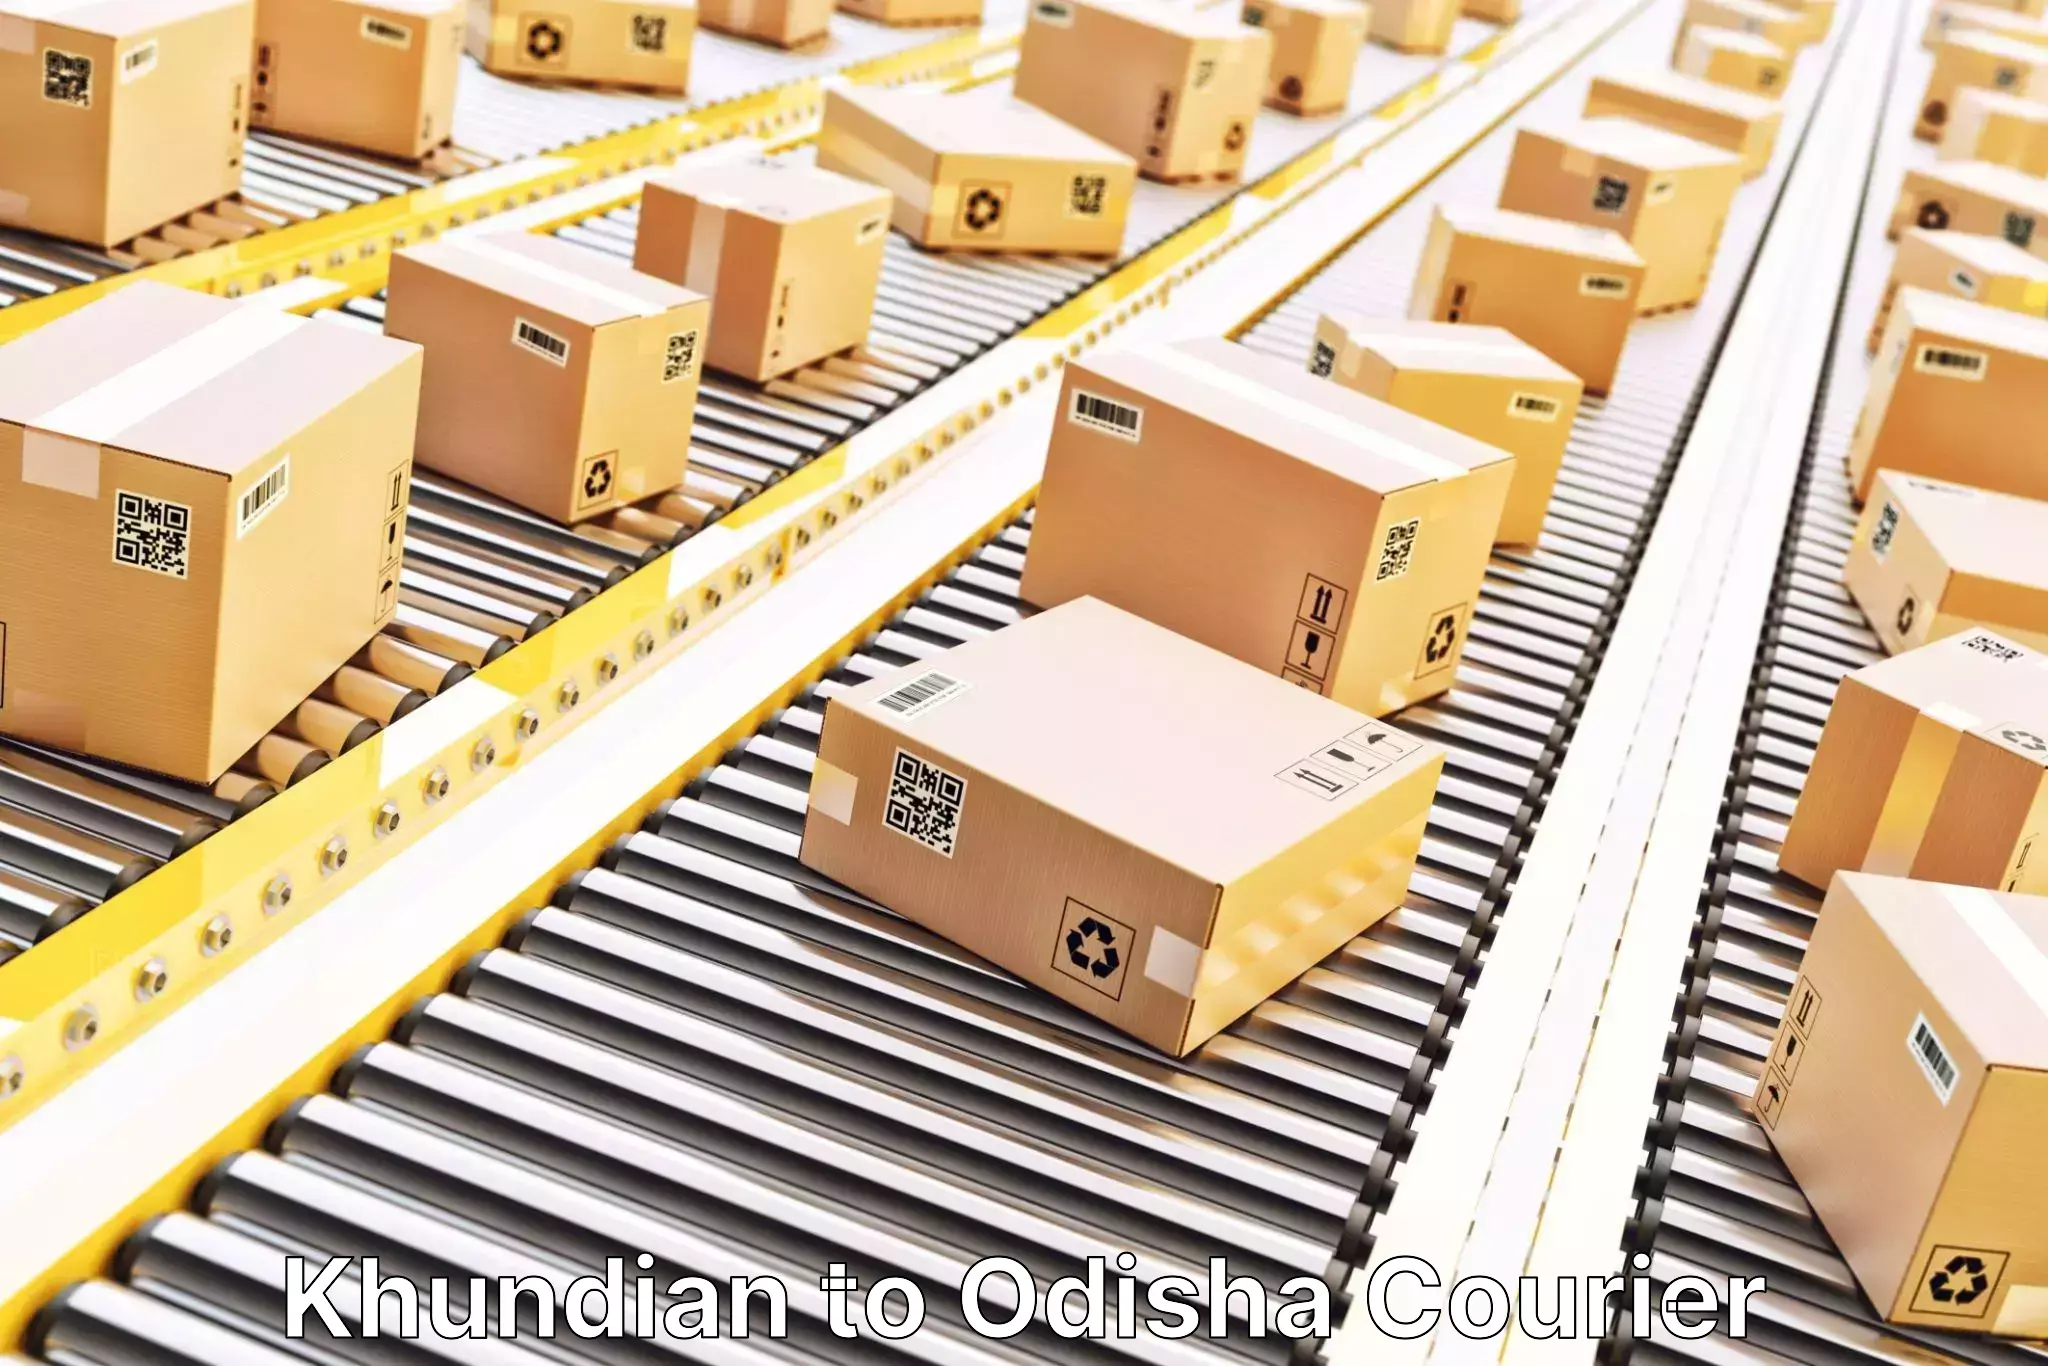 Smart shipping technology Khundian to Odisha